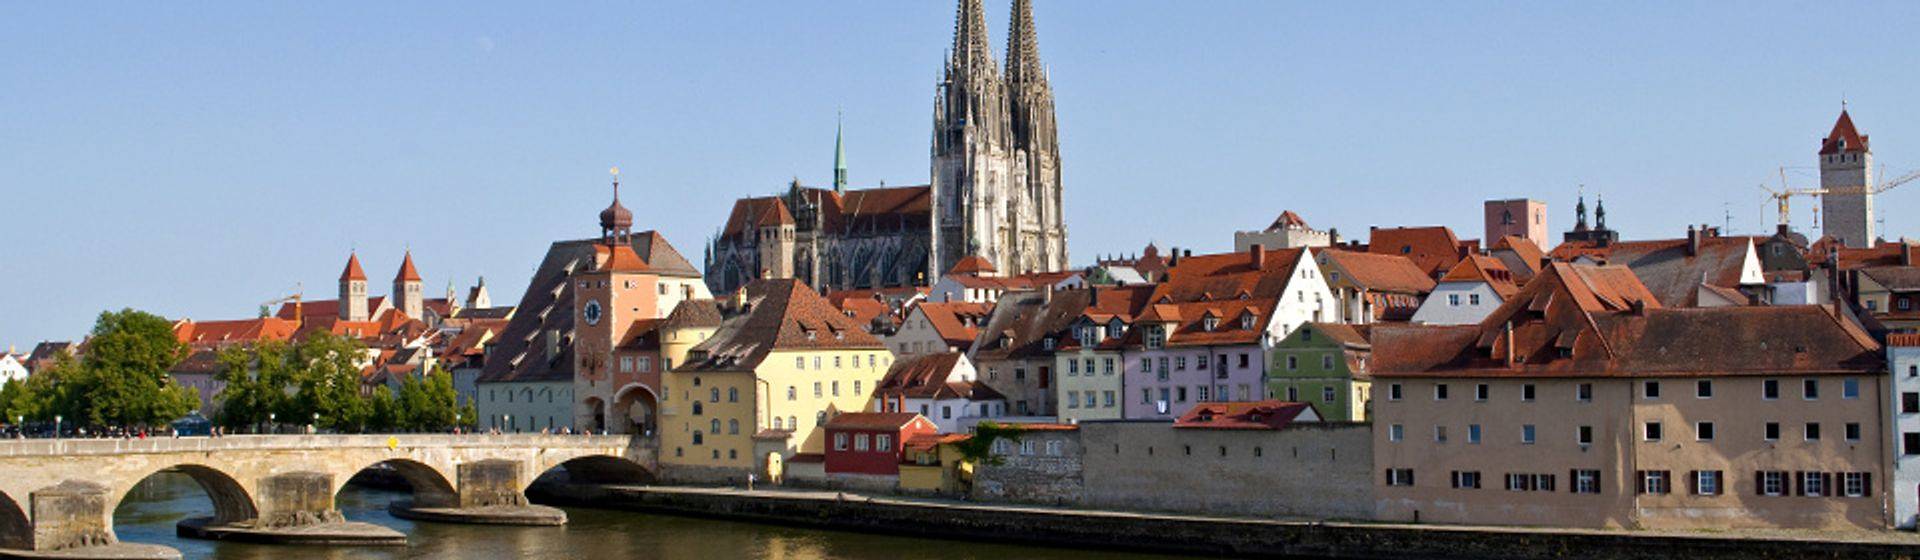 Holidays to Regensburg Image